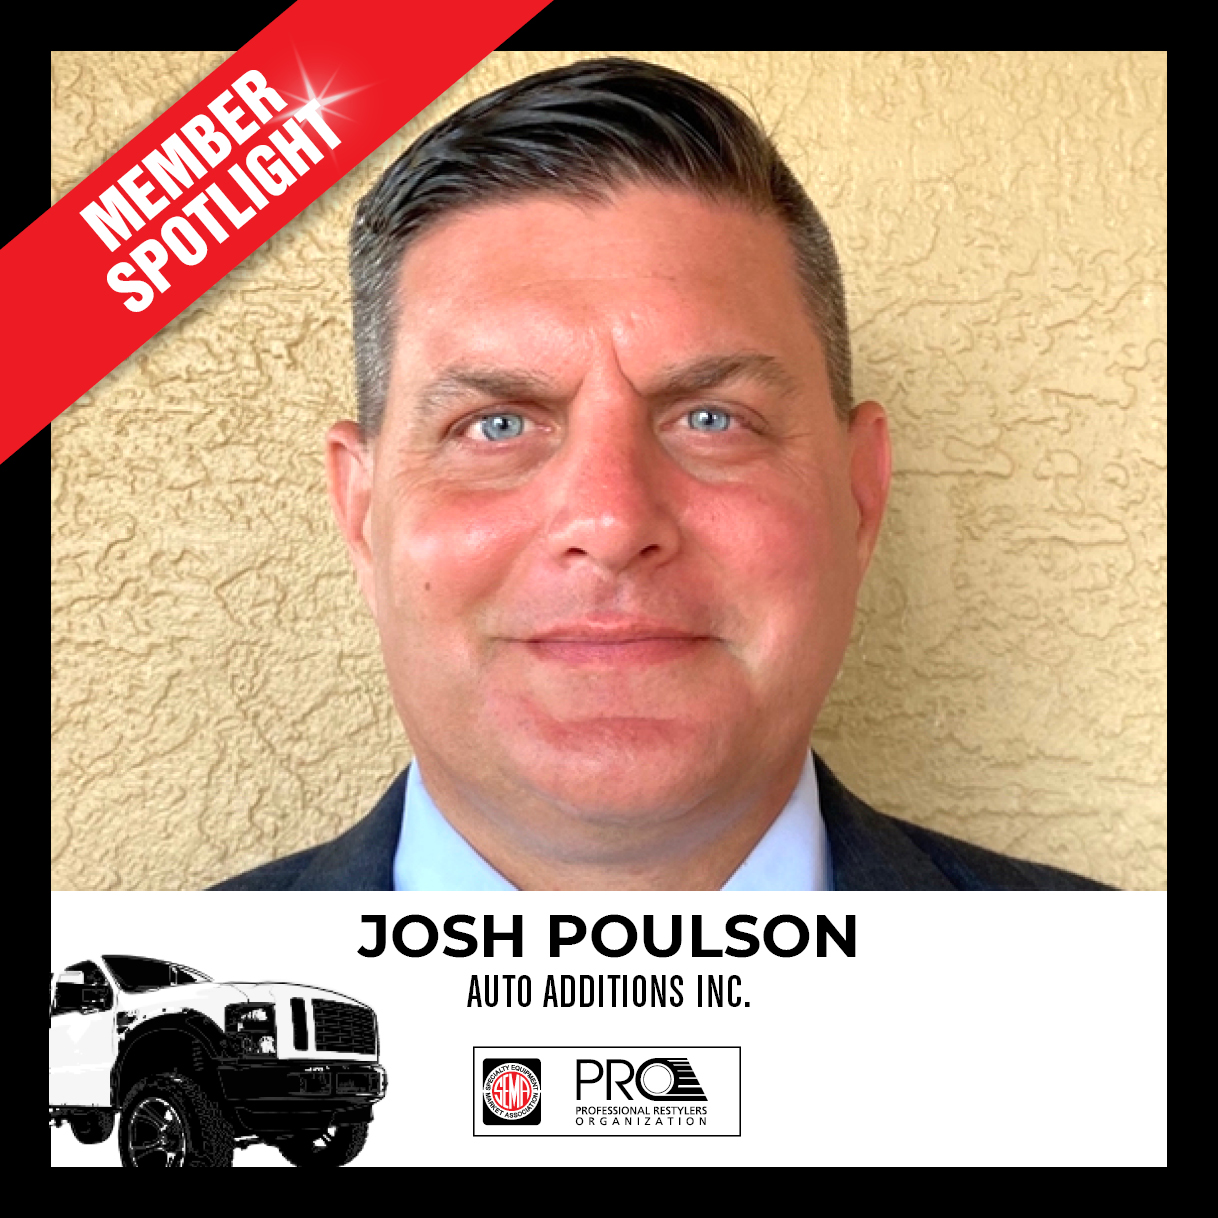 PRO Member Spotlight - Josh Poulson